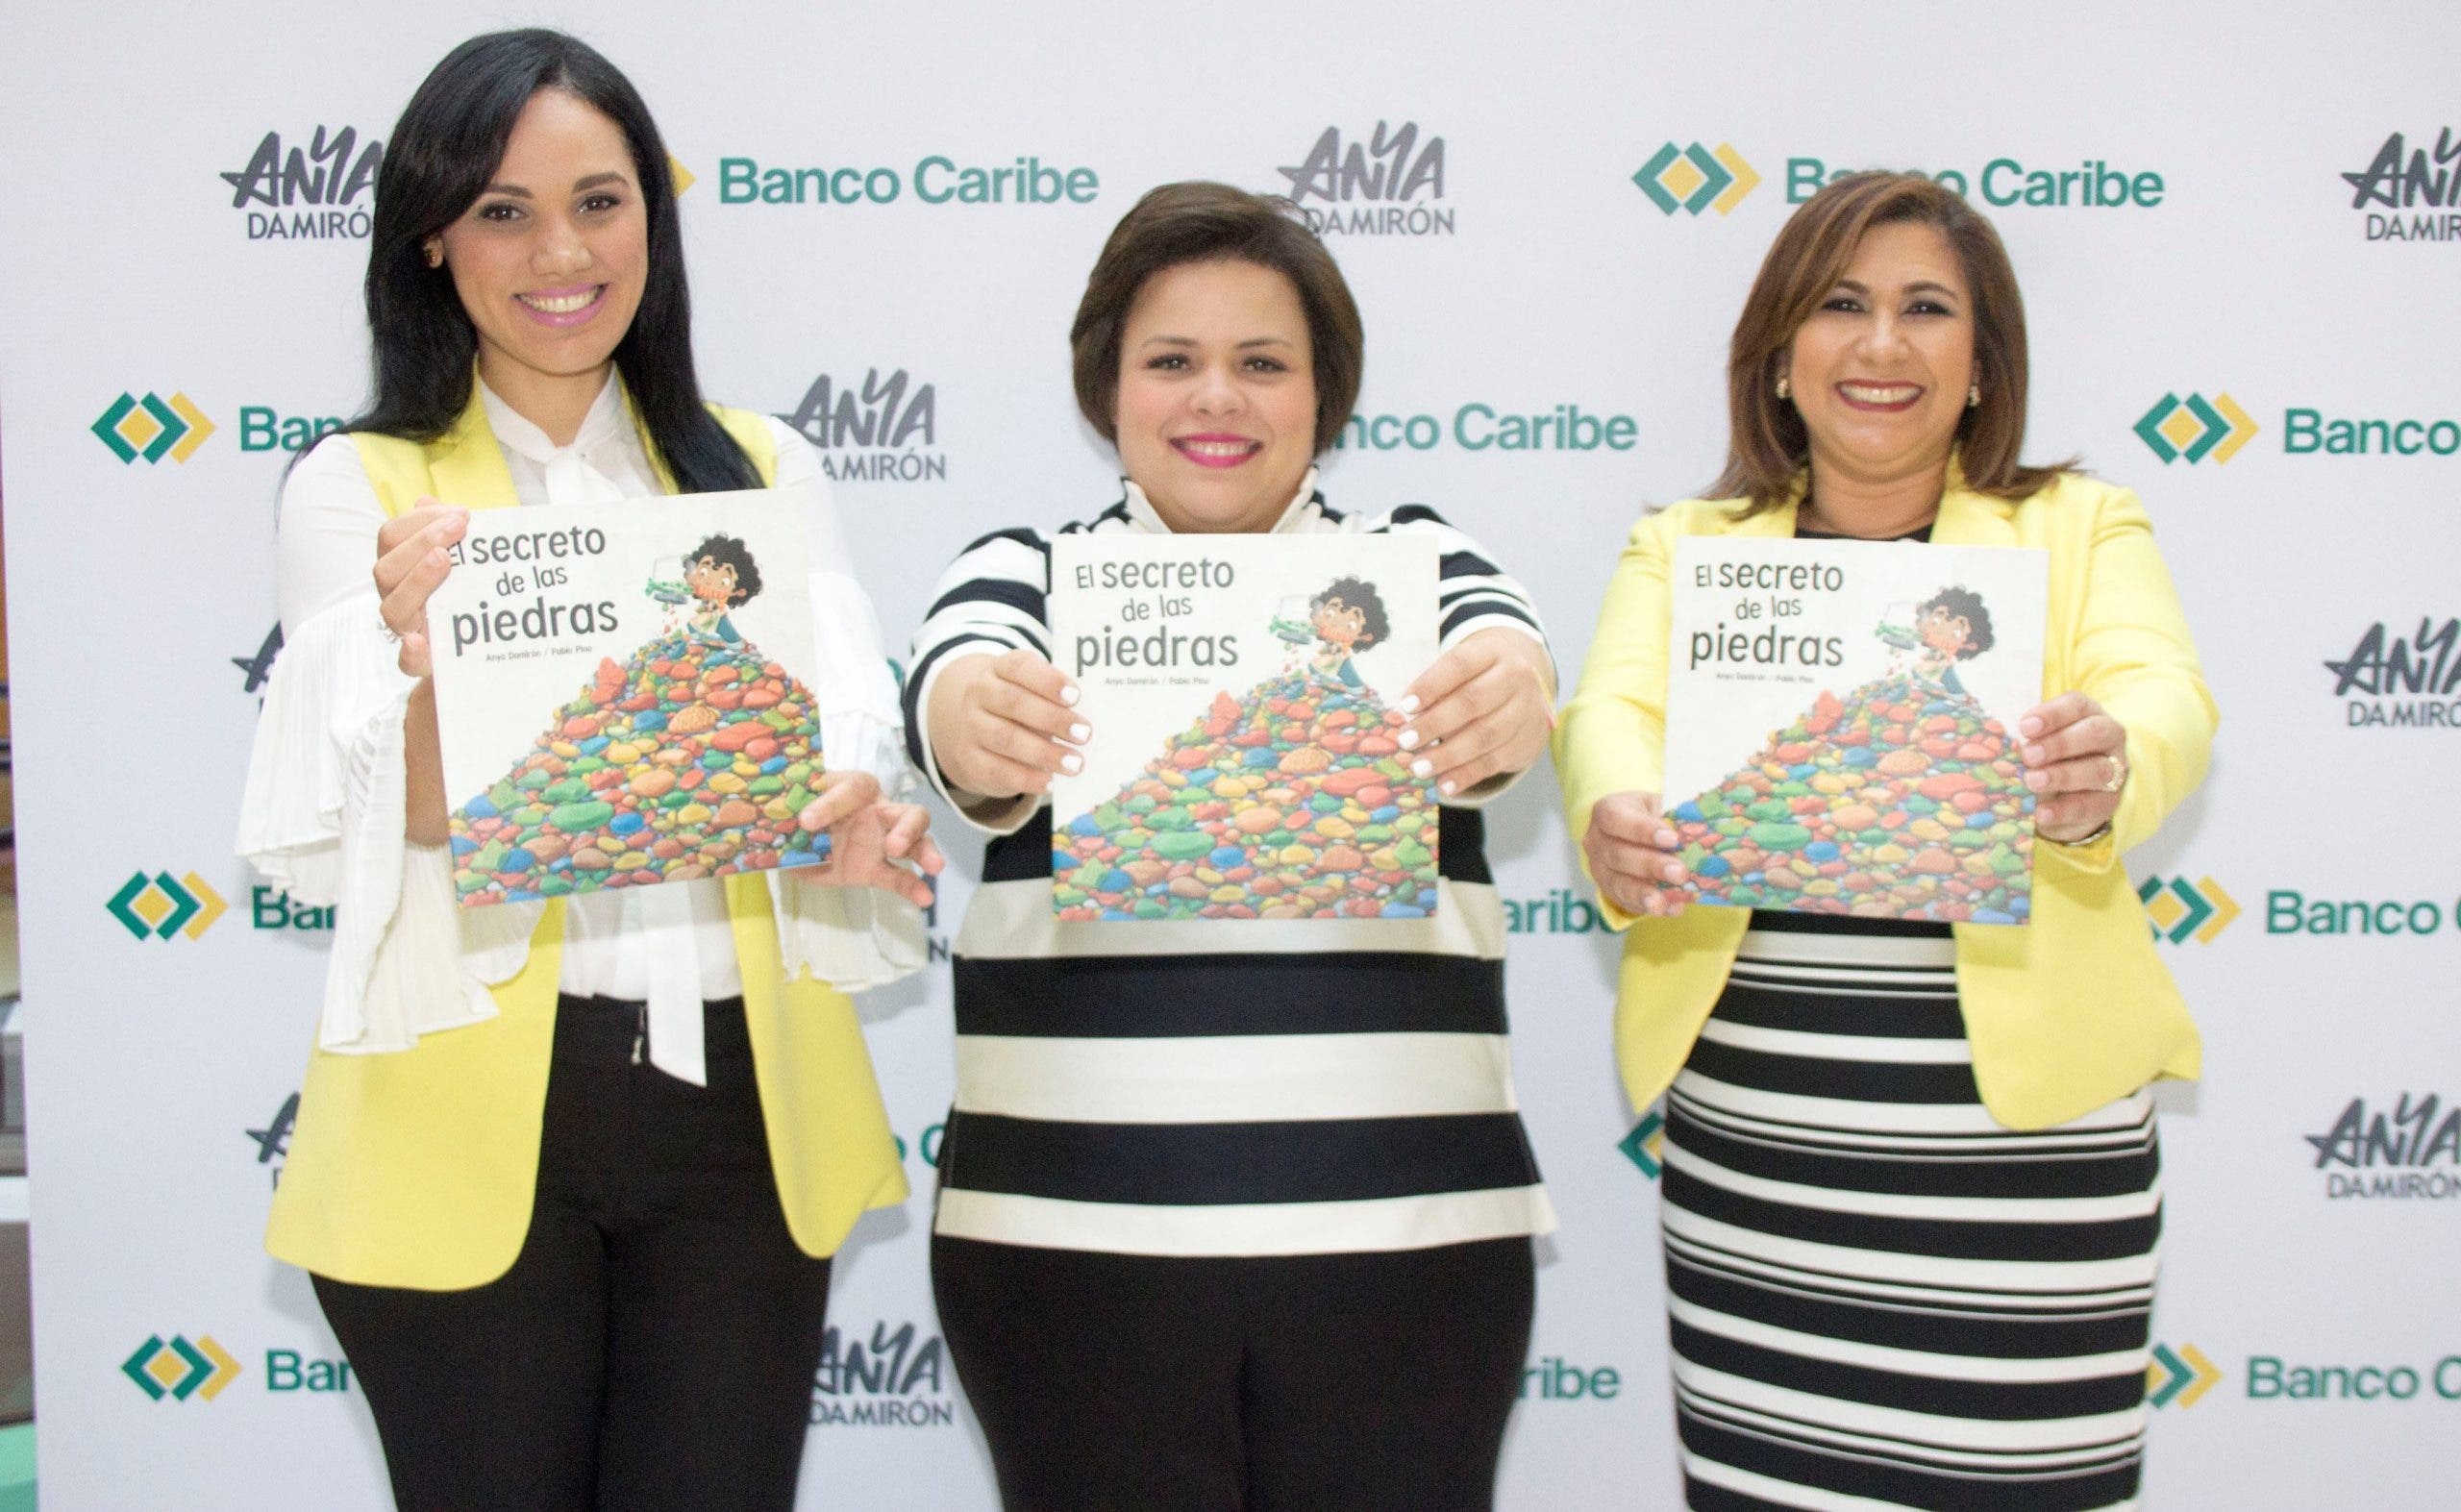 Banco Caribe presenta libro infantil de Anya Damirón